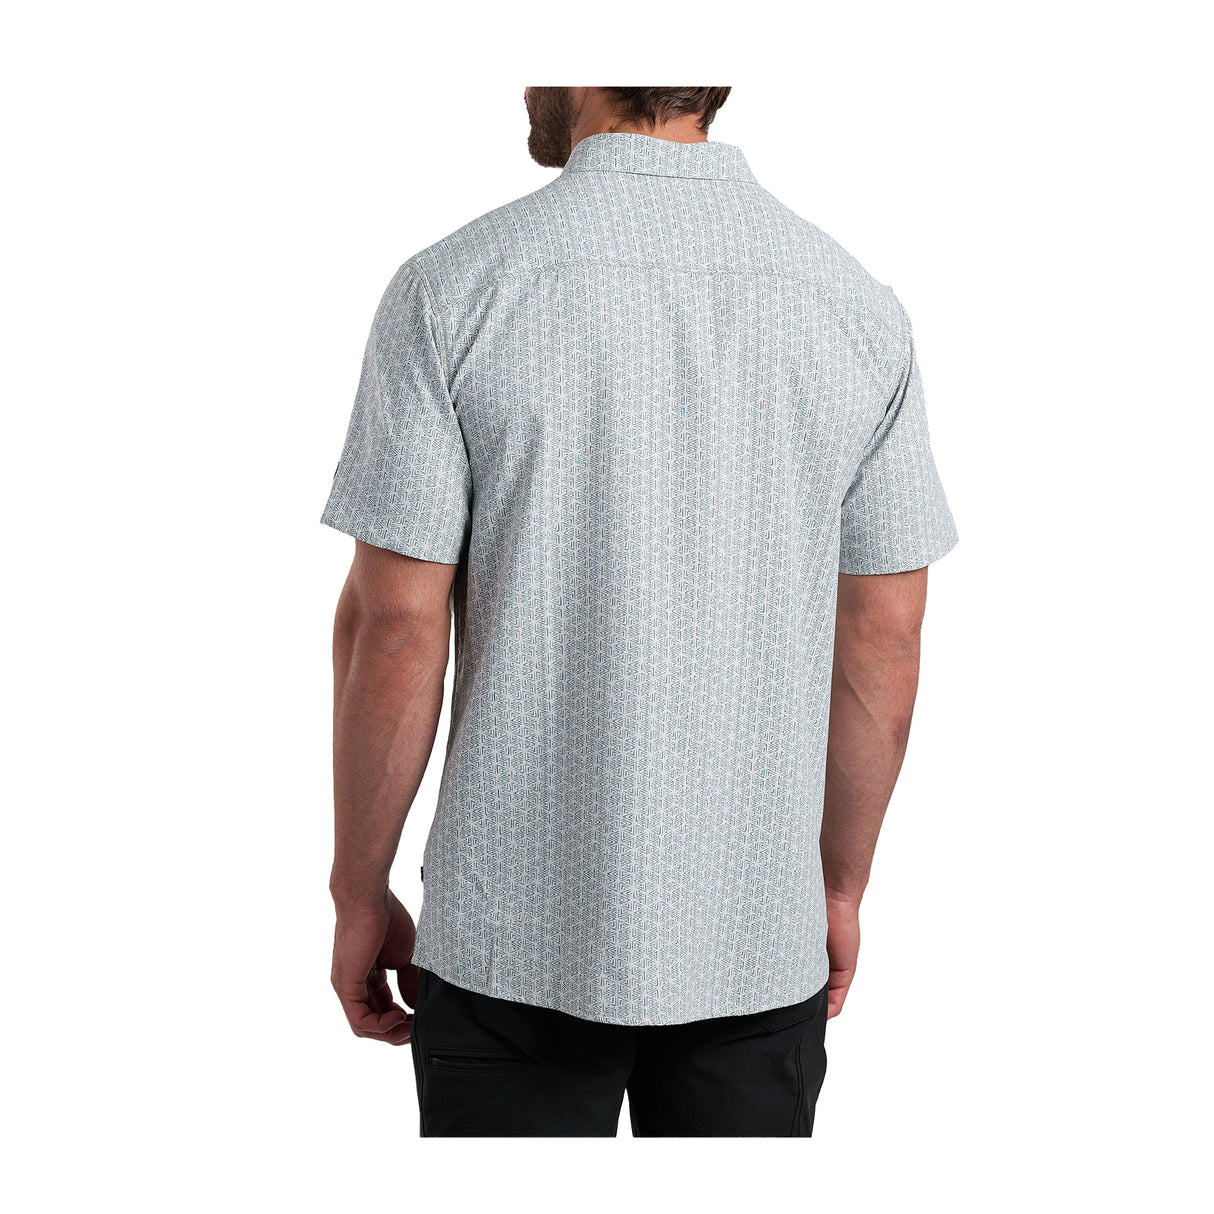 Kuhl Persuadr Short Sleeve Shirt (Men) - Sea Salt Apparel - Top - Short Sleeve - The Heel Shoe Fitters